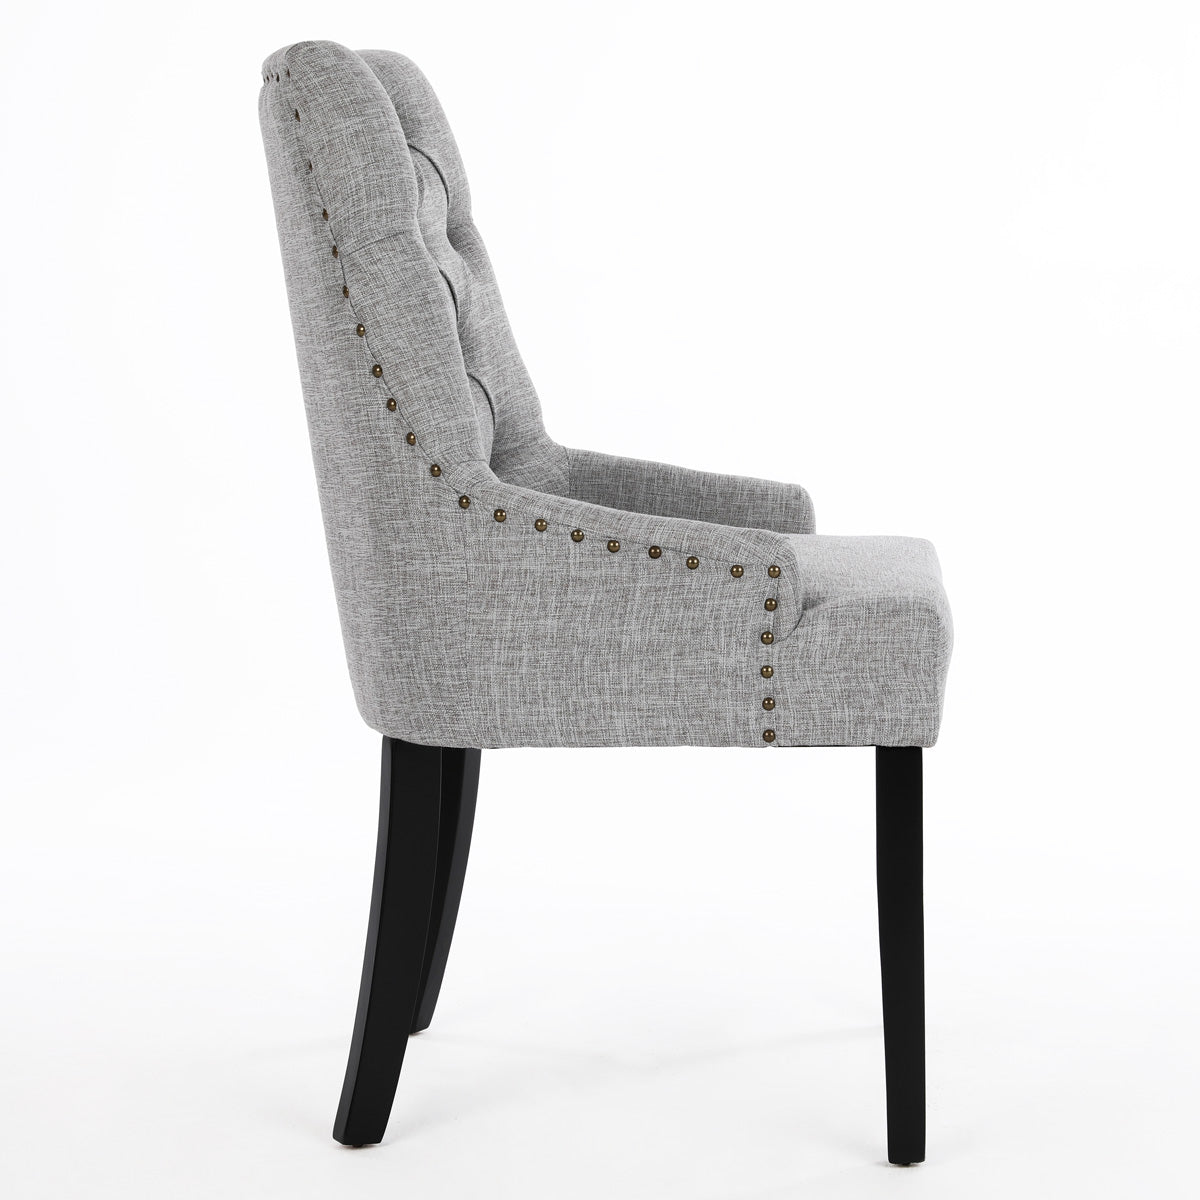 Chloe Scoop Back Dining Chairs (Set of 2, Grey Fabric / Black Legs)